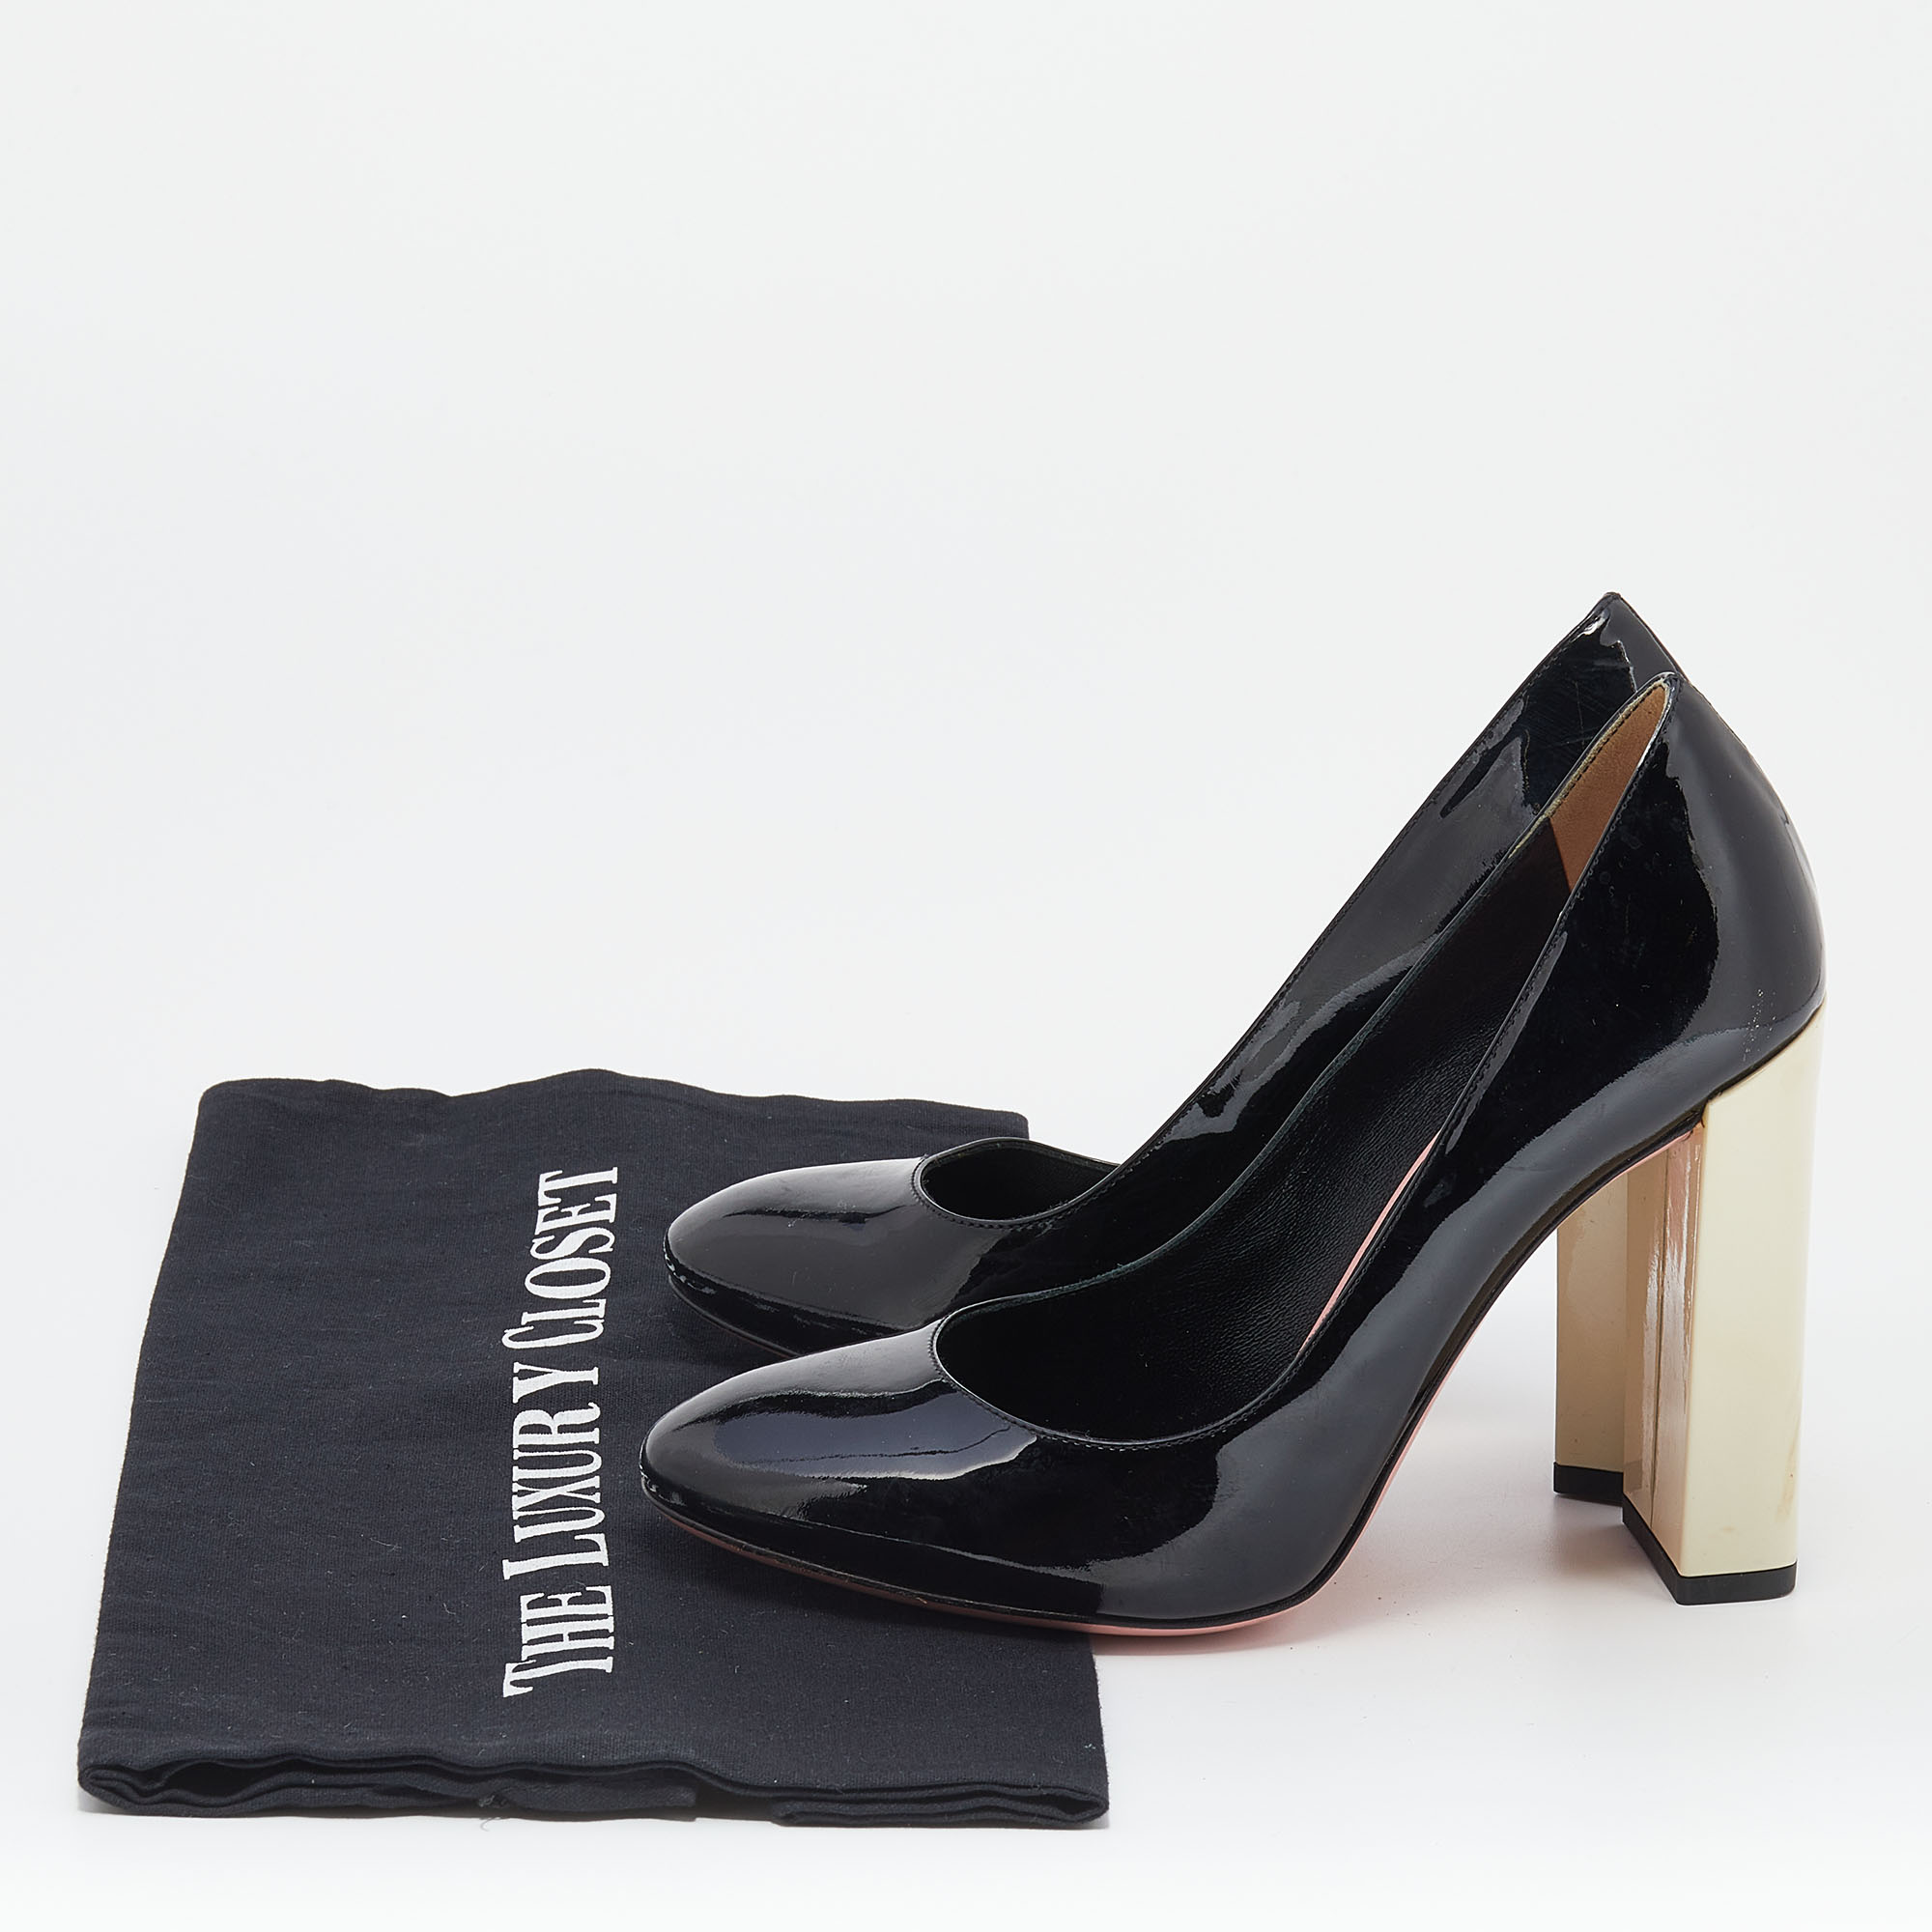 Fendi Black Patent Leather Block Heel Pumps Size 36